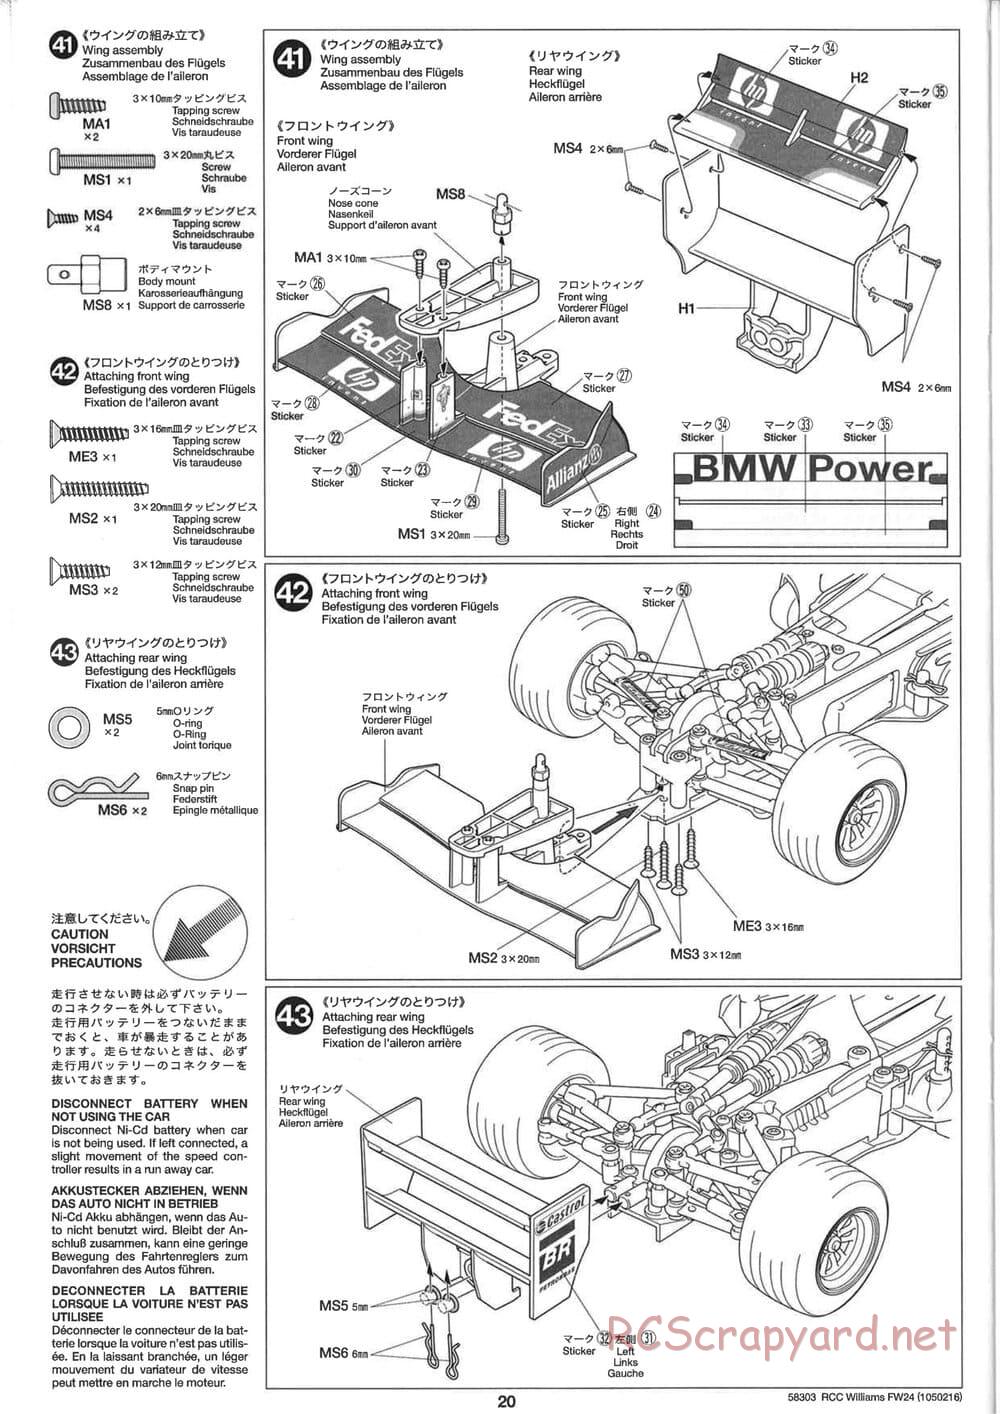 Tamiya - Williams F1 BMW FW24 - F201 Chassis - Manual - Page 20